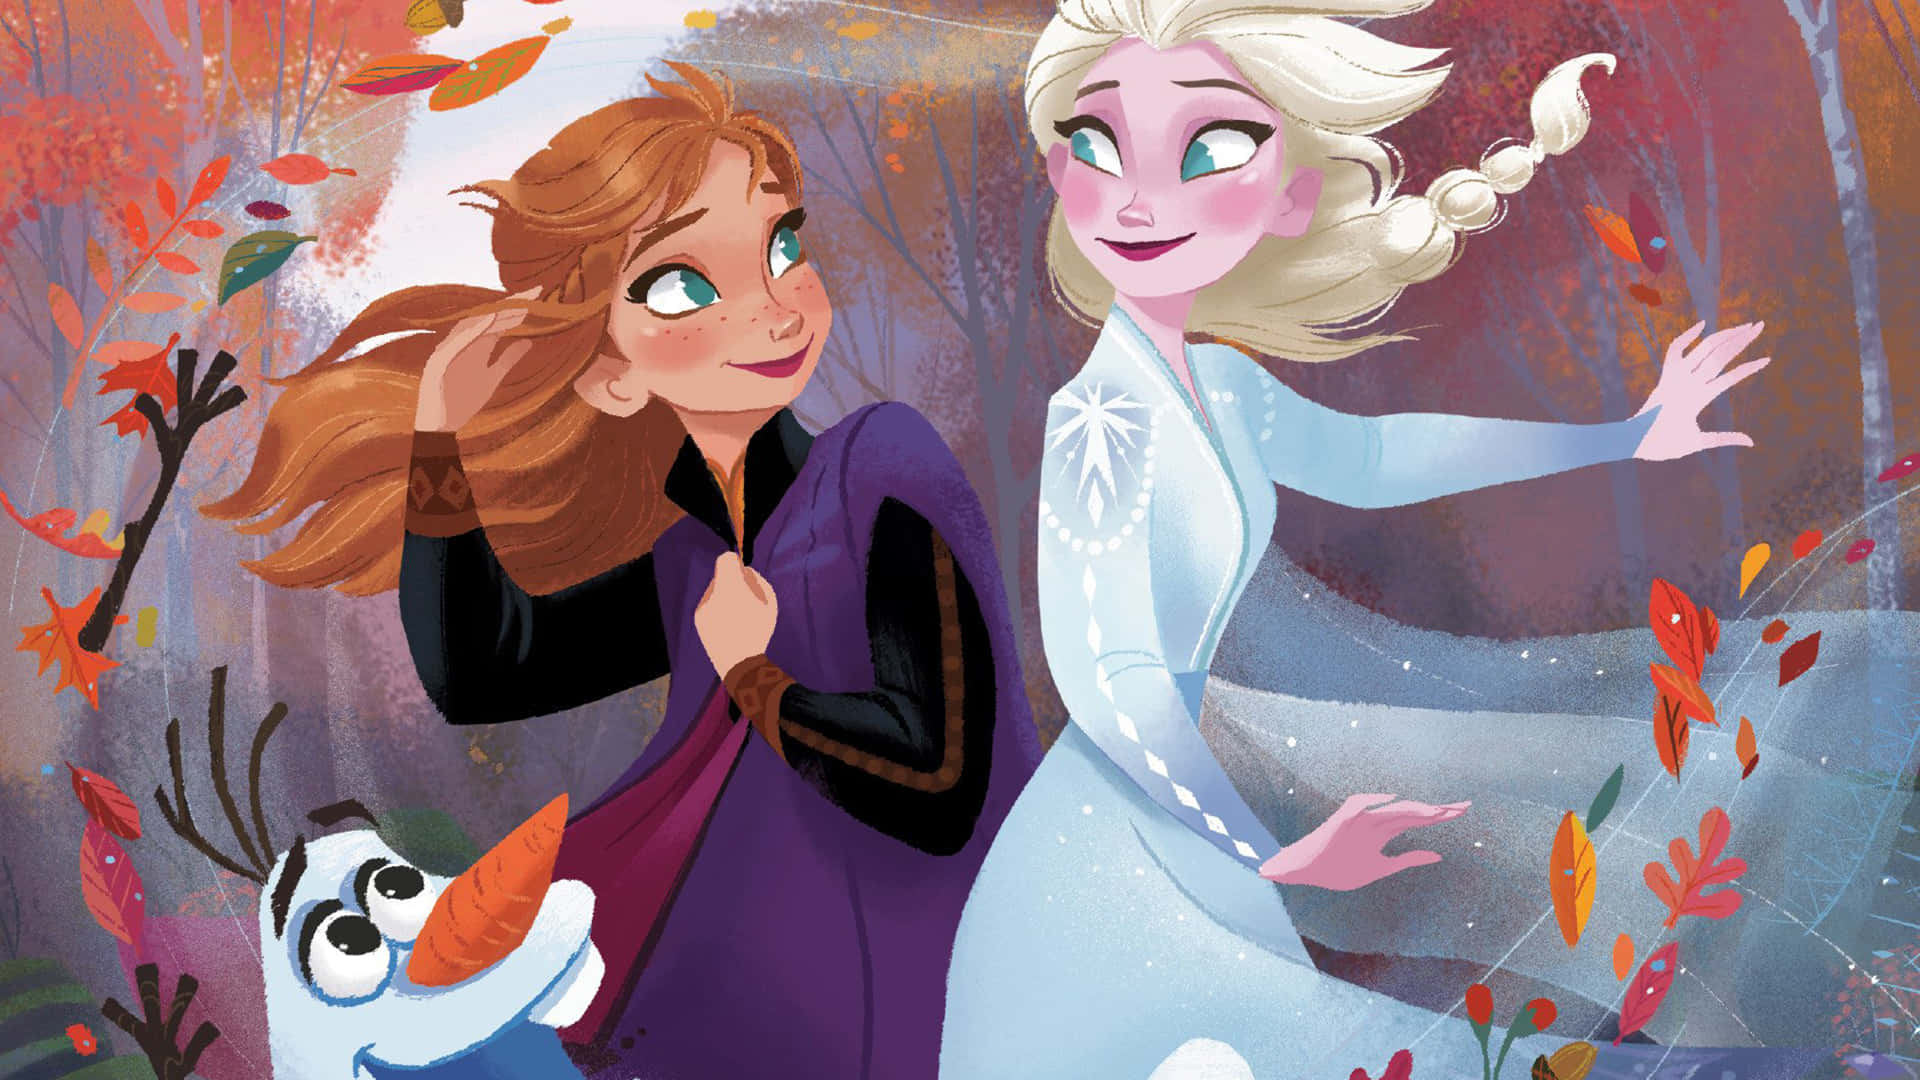 Disney Frozen Elsa And Anna